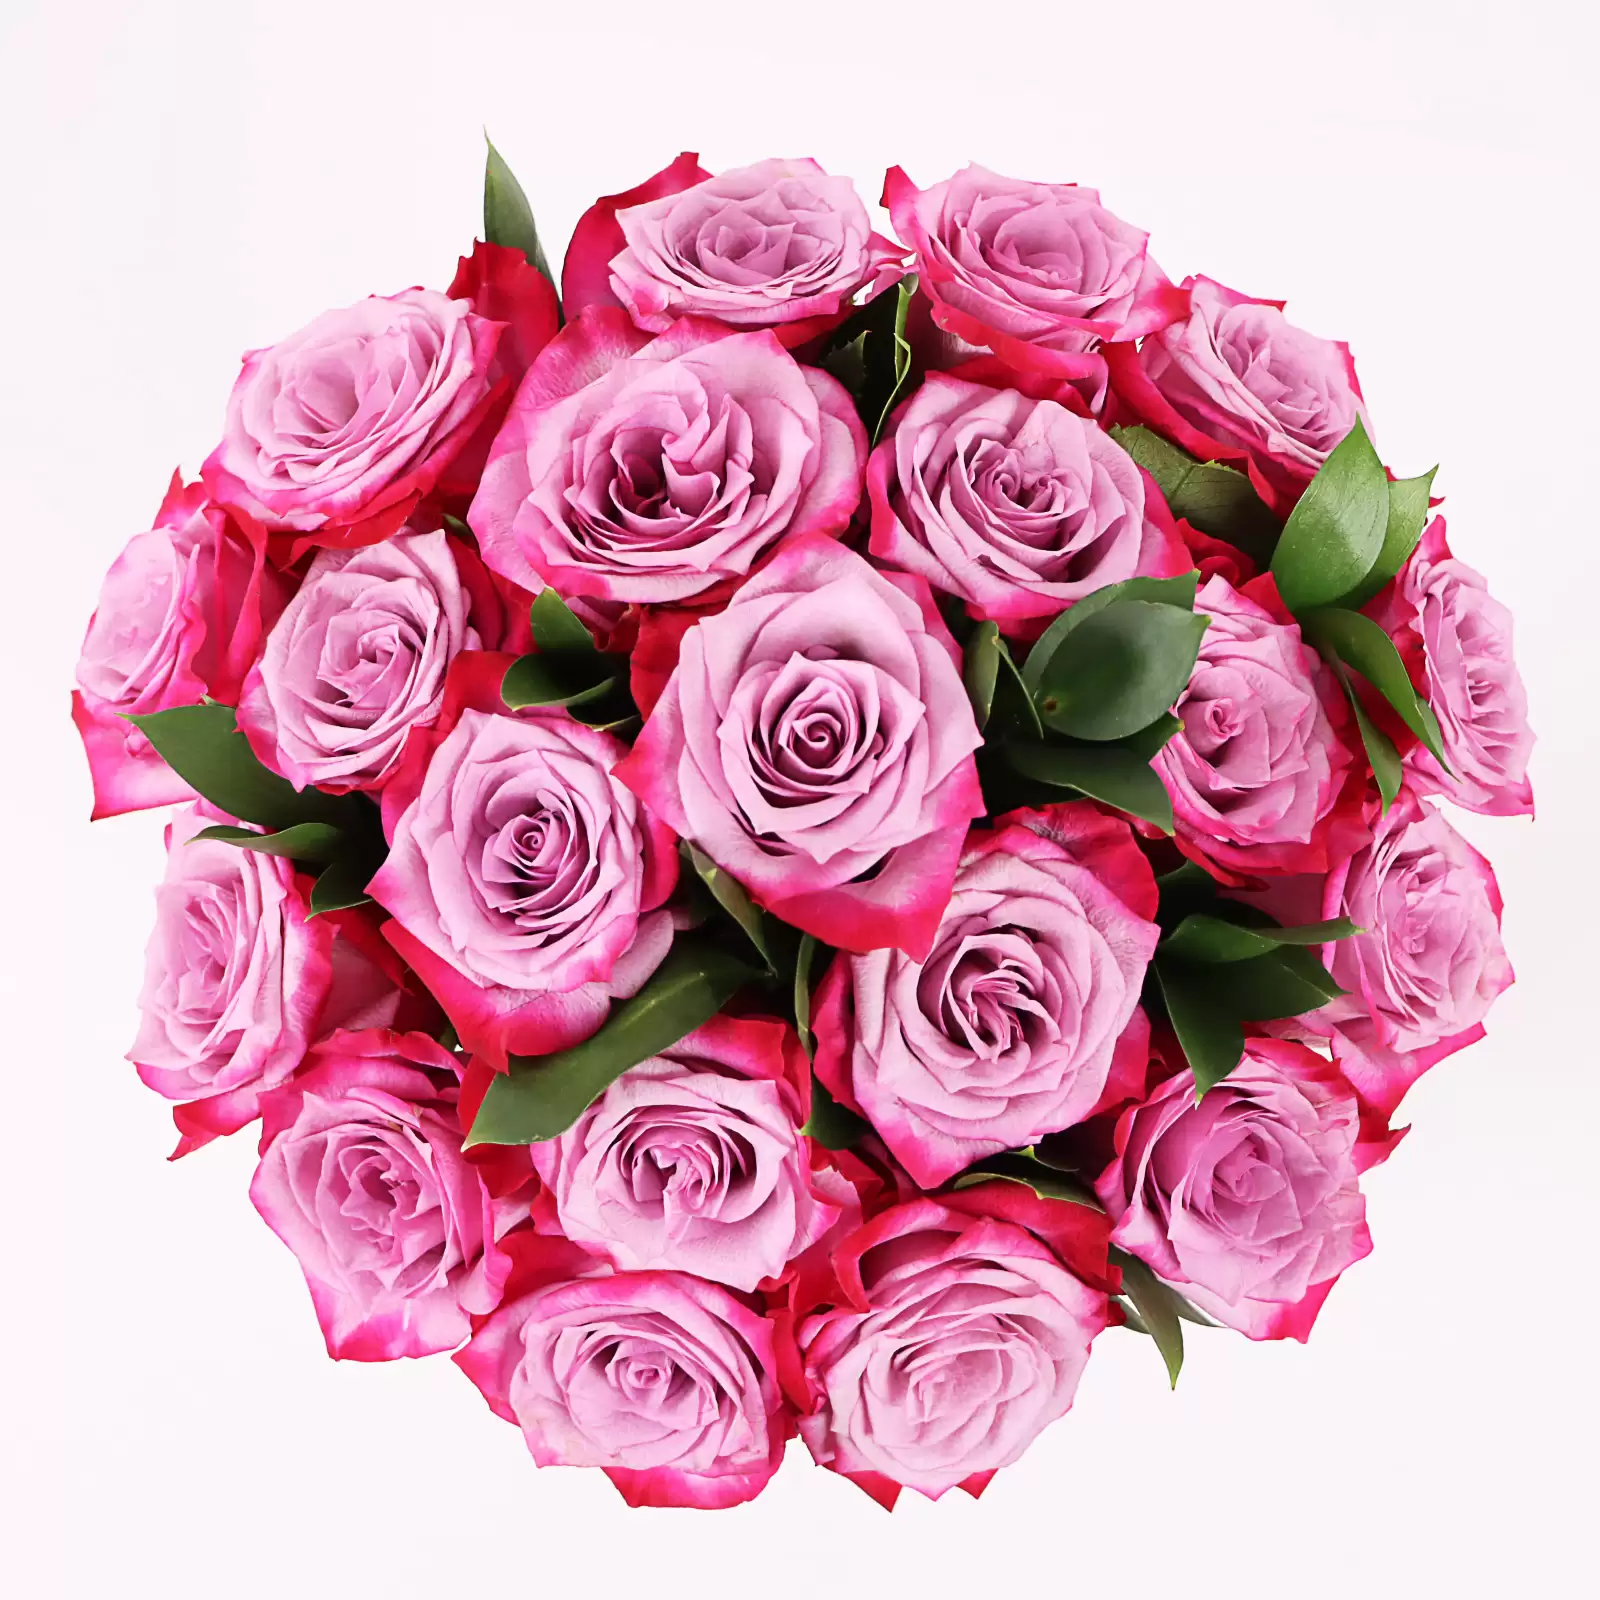 Morning Glory Purple Flora Vase Of Roses - Flora D'lite